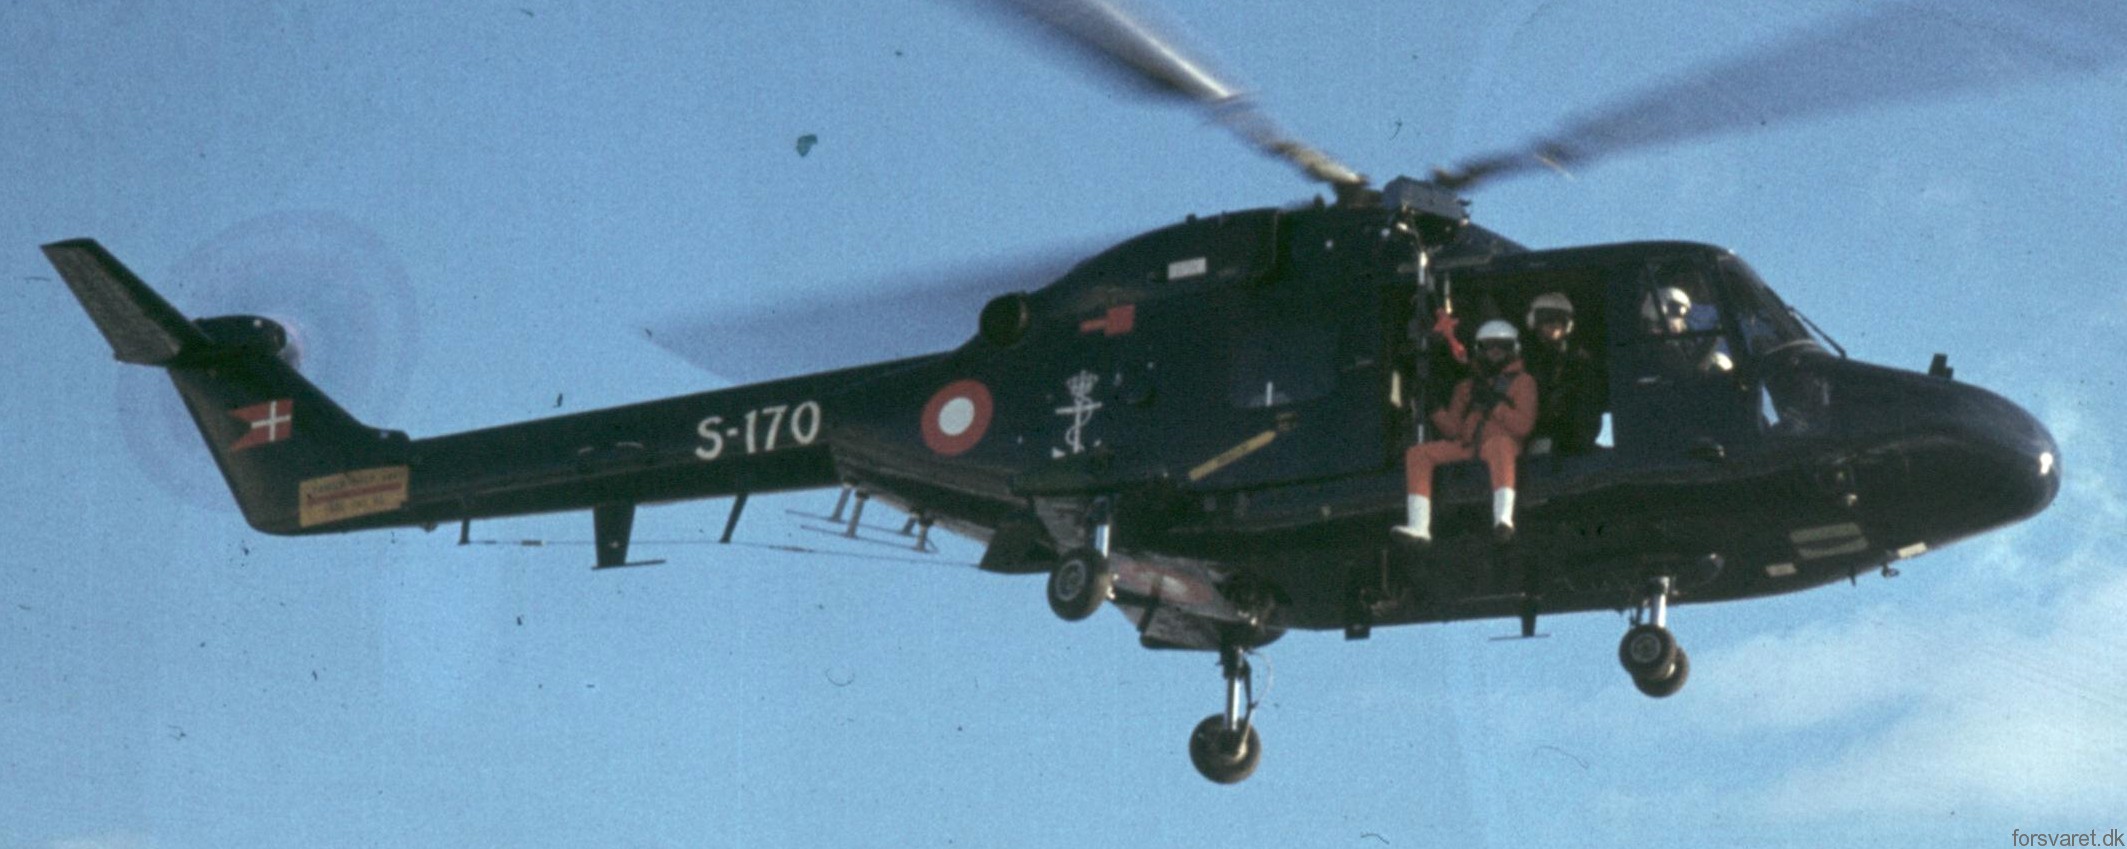 lynx mk.80 mk.90b helicopter westland royal danish navy air force kongelige danske marine flyvevabnet s-170 12